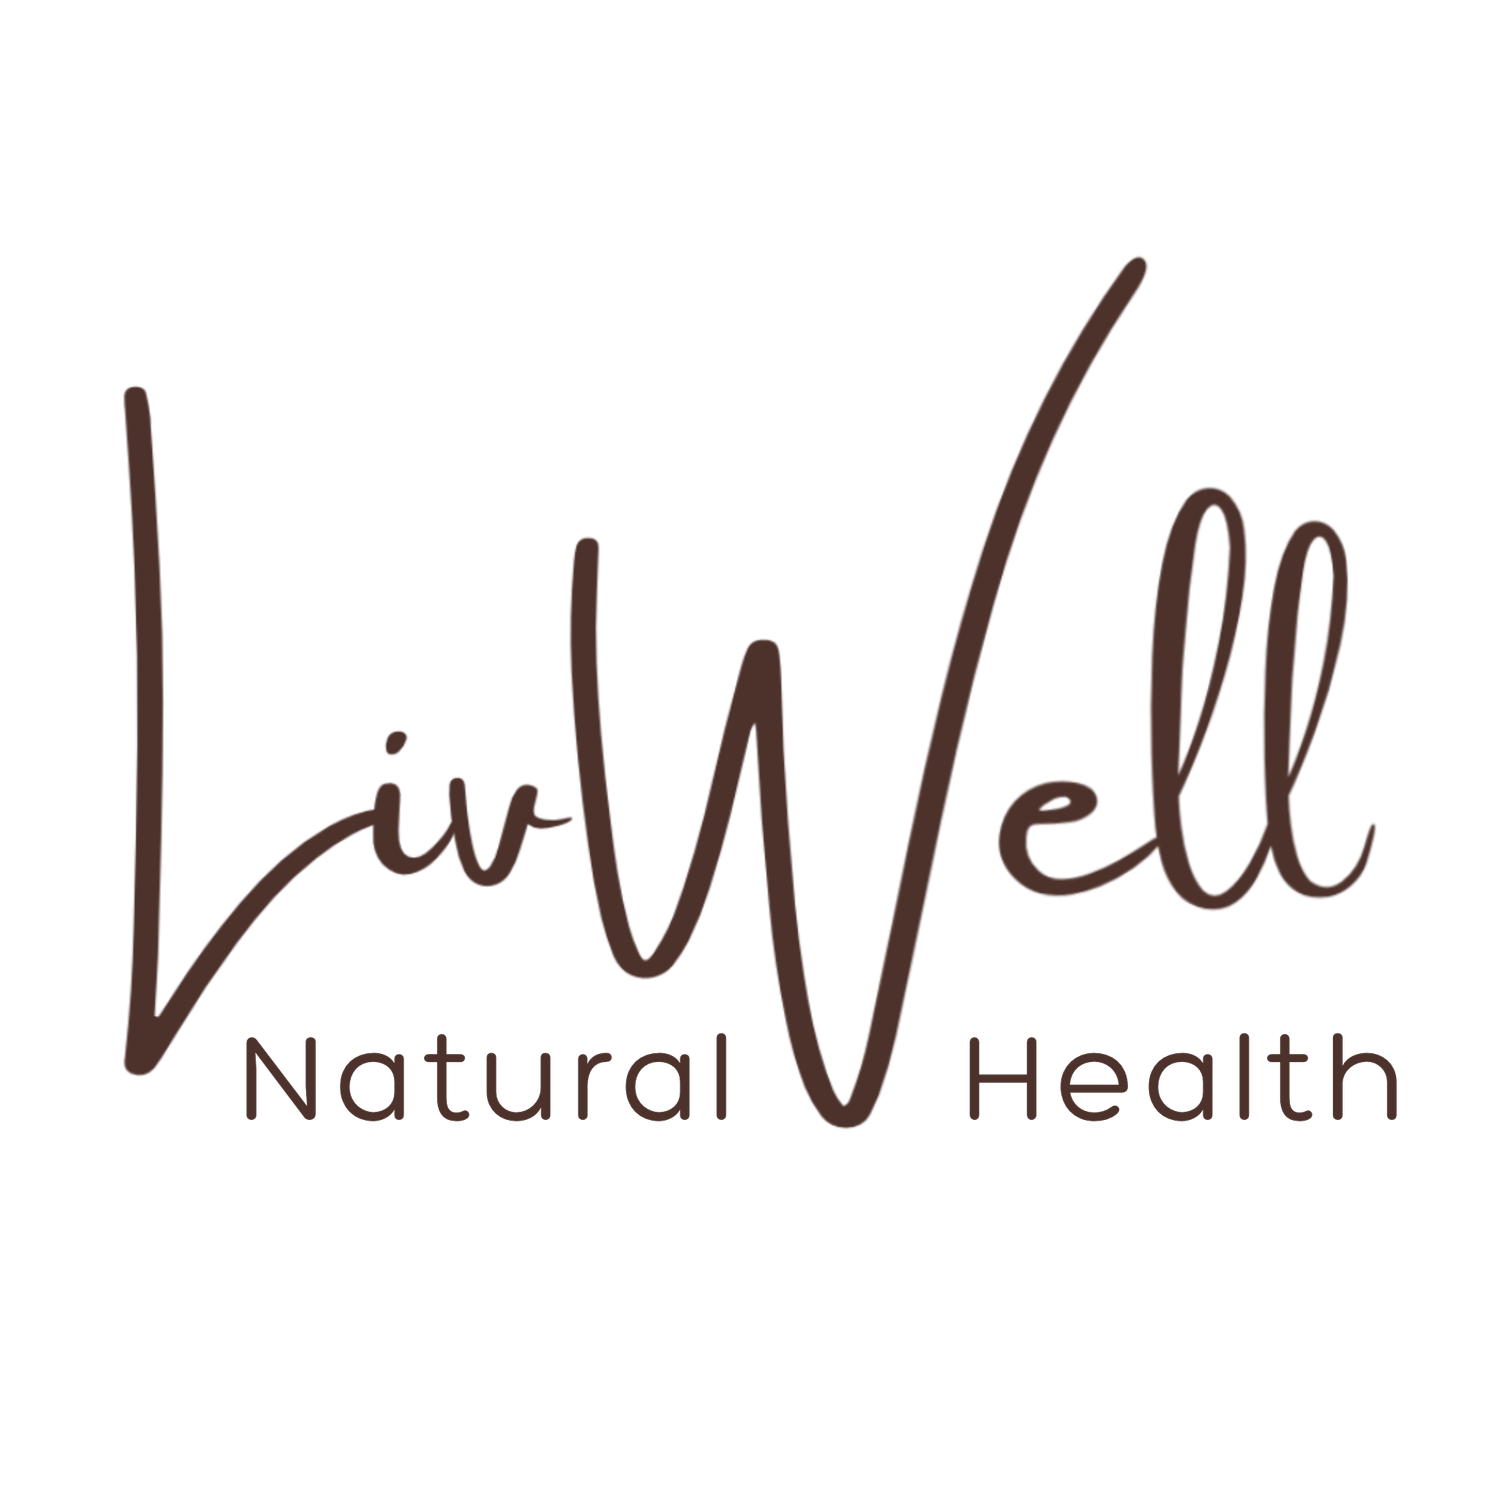 LivWell Natural Health